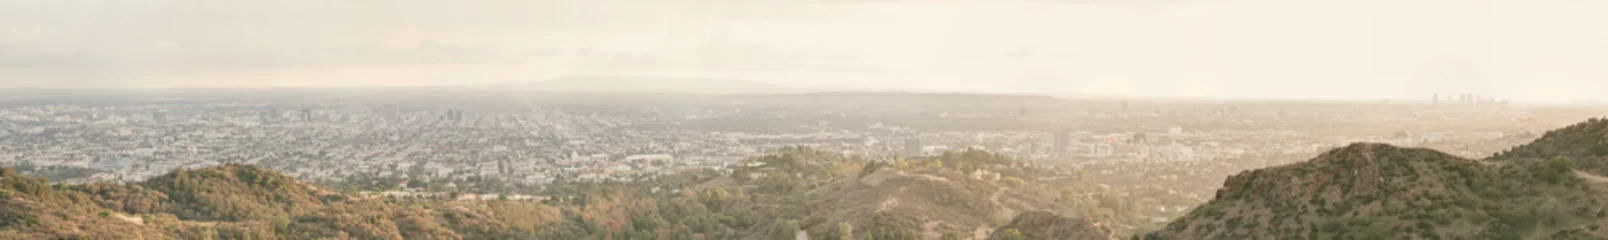 Fototapeten Panoramablick auf die Stadt Los Angeles © oneinchpunch